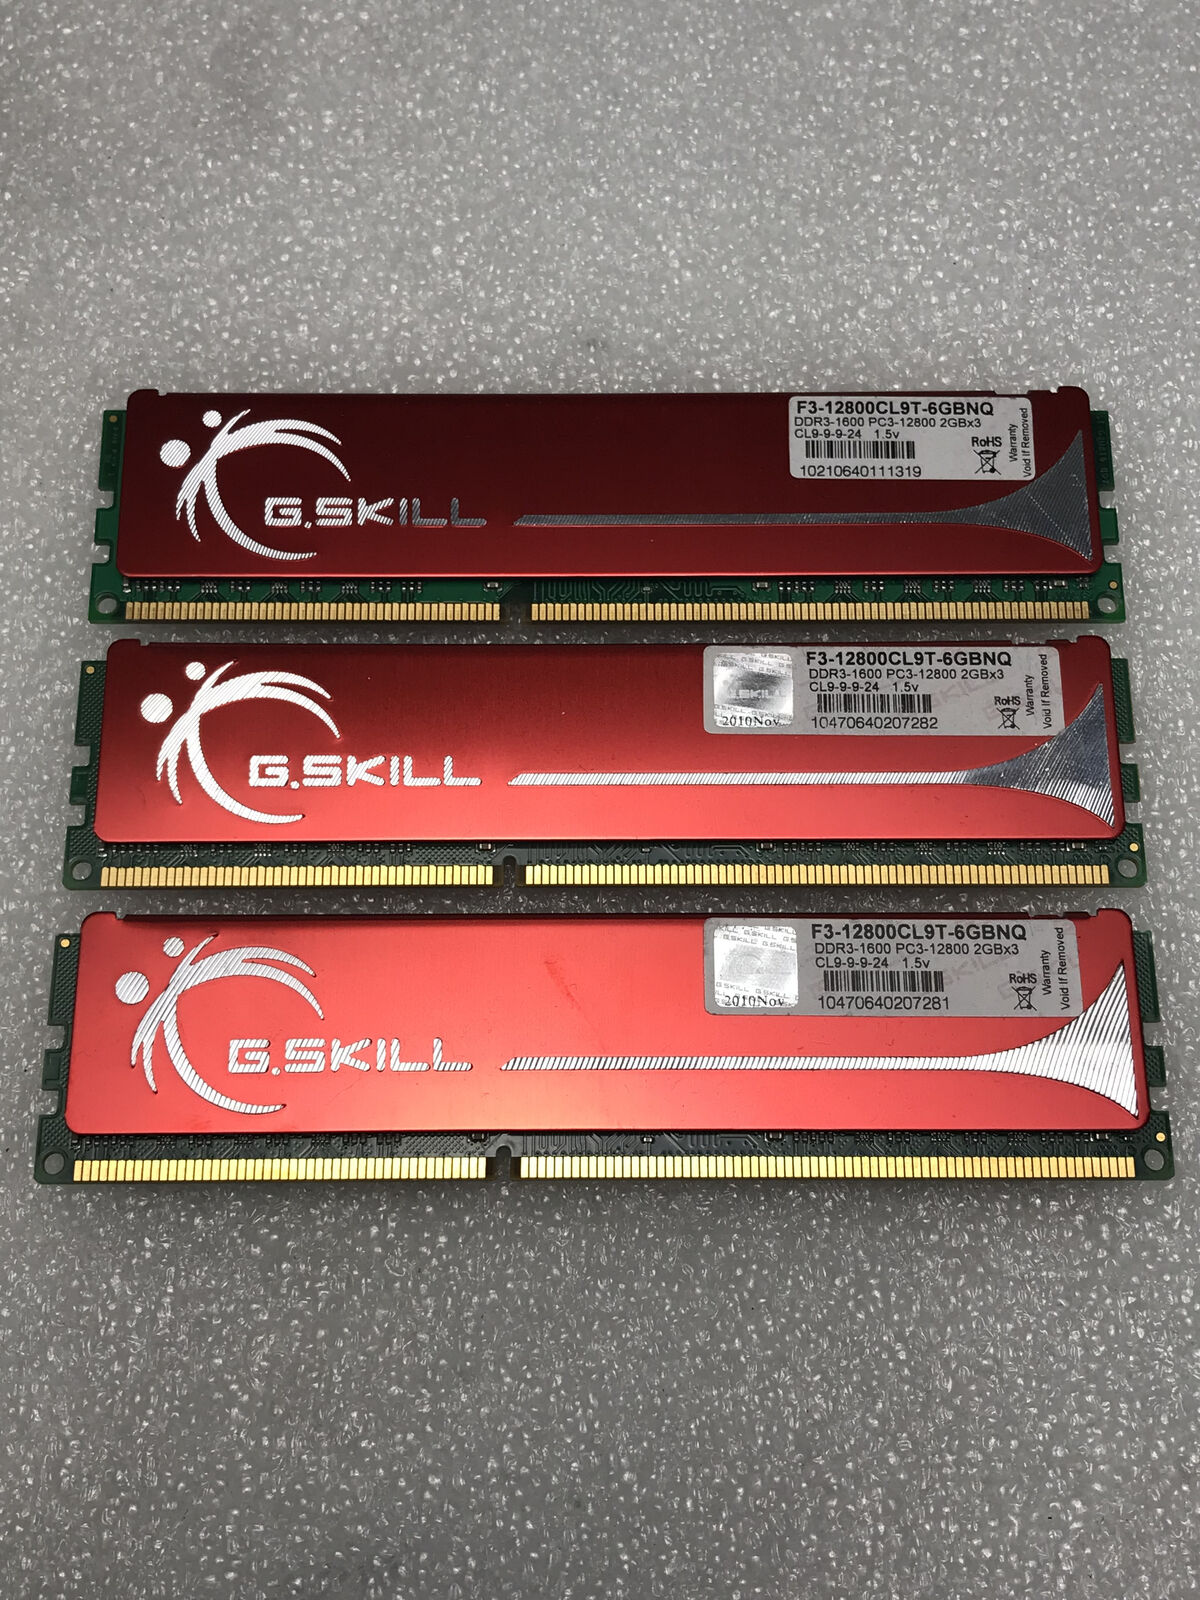 6GB | G.Skill Ripjaws 6GB (3x2GB) DDR3 1600MHz (PC3-12800) Gaming Memory RAM